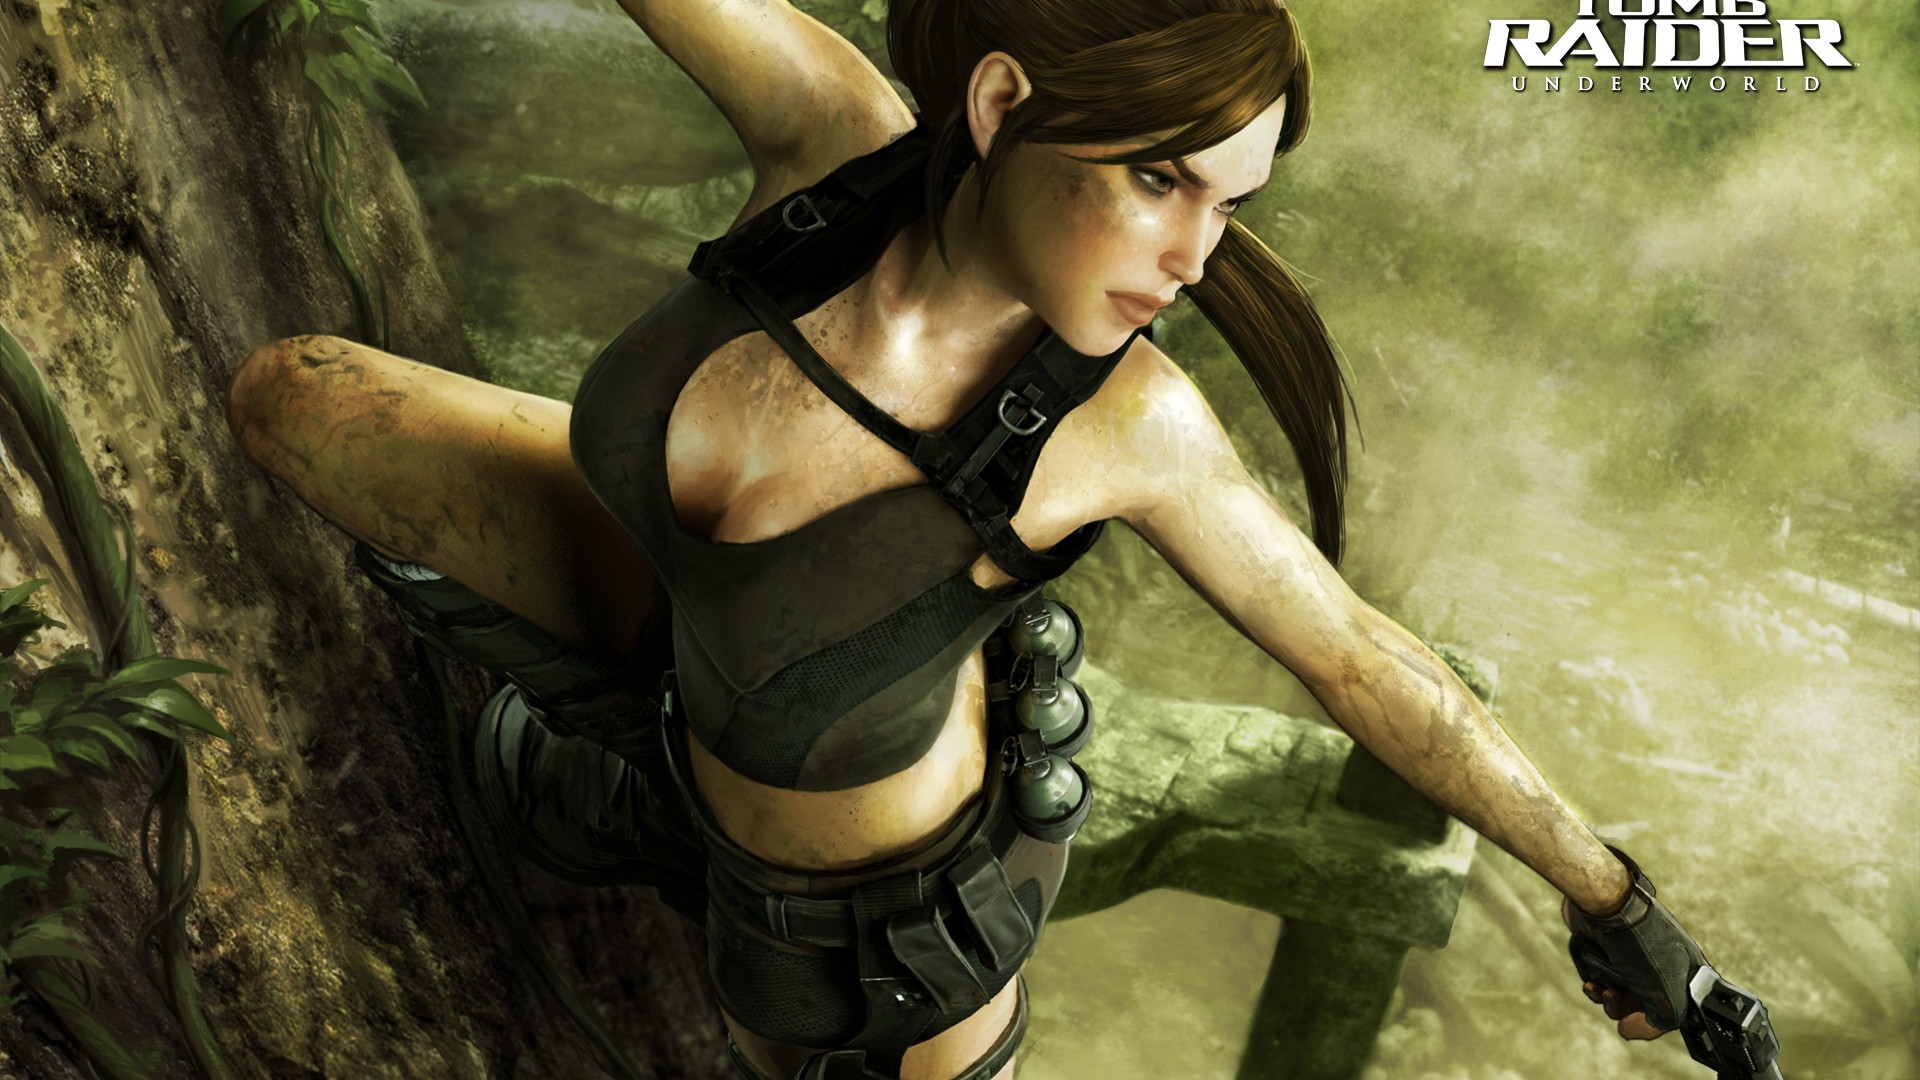 Lara Croft Tomb Raider 8 Underworld #9 - 1920x1080